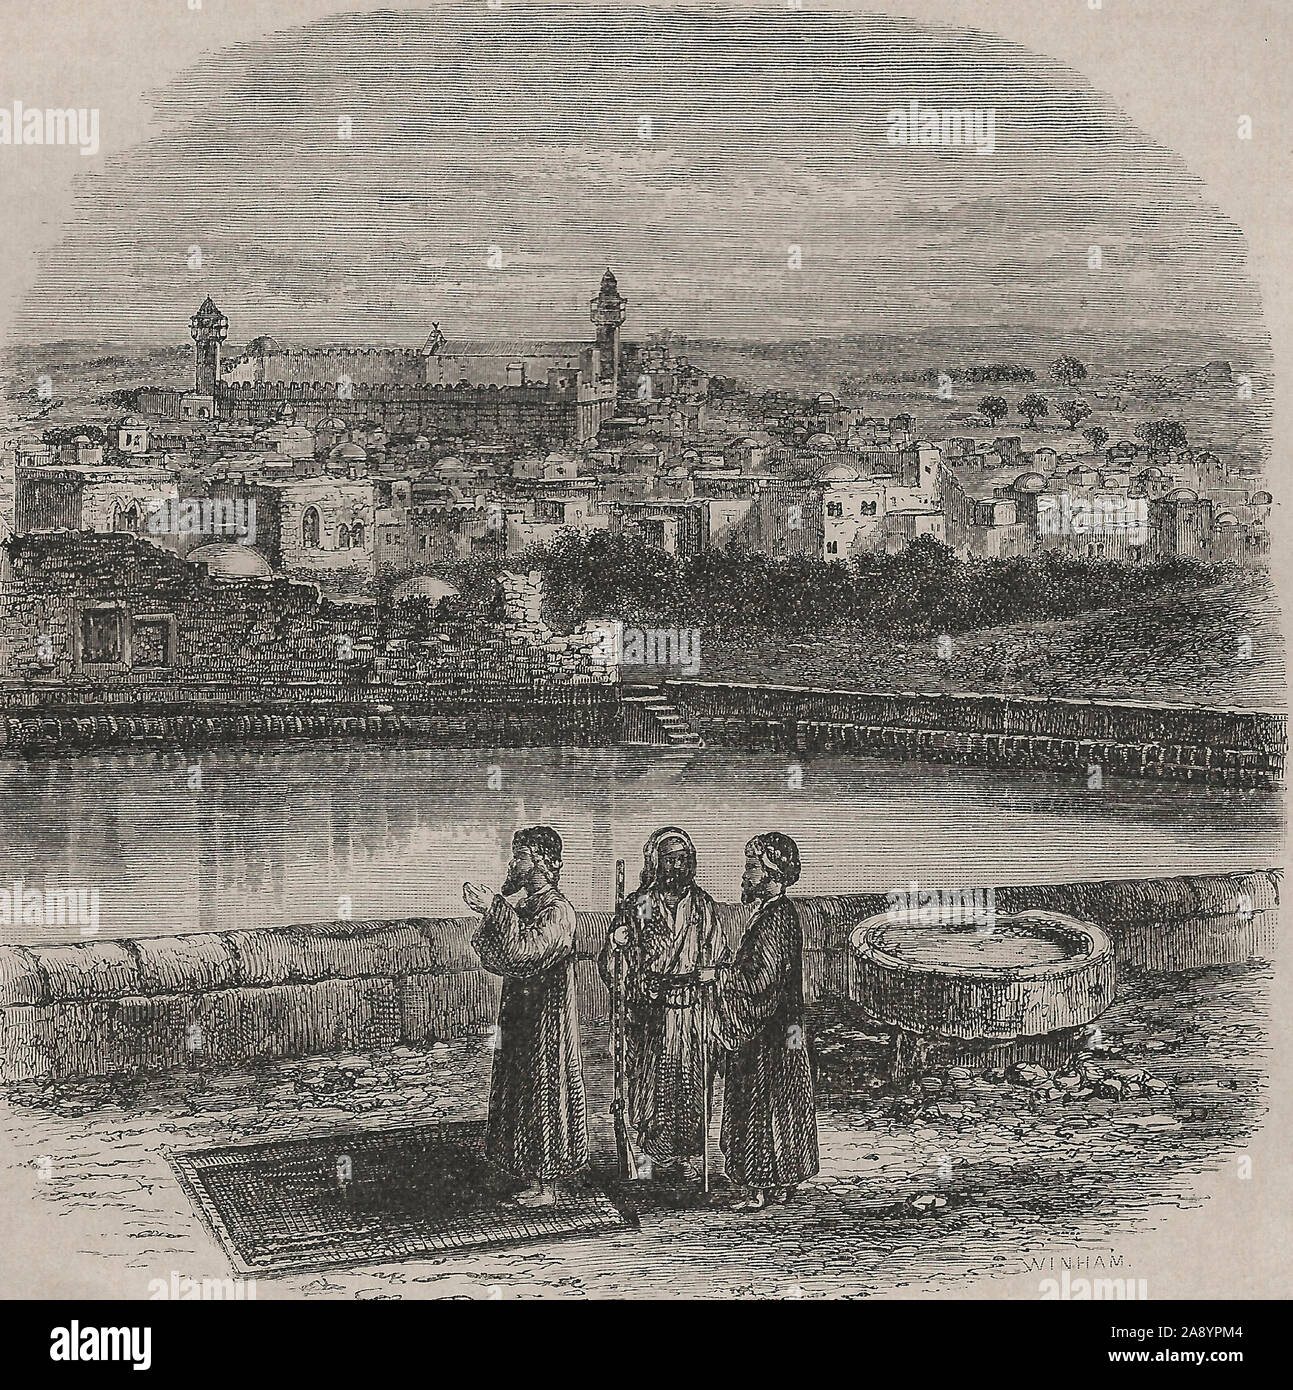 Untere Pool von Hebron, Palästina, ca. 1880 Stockfoto